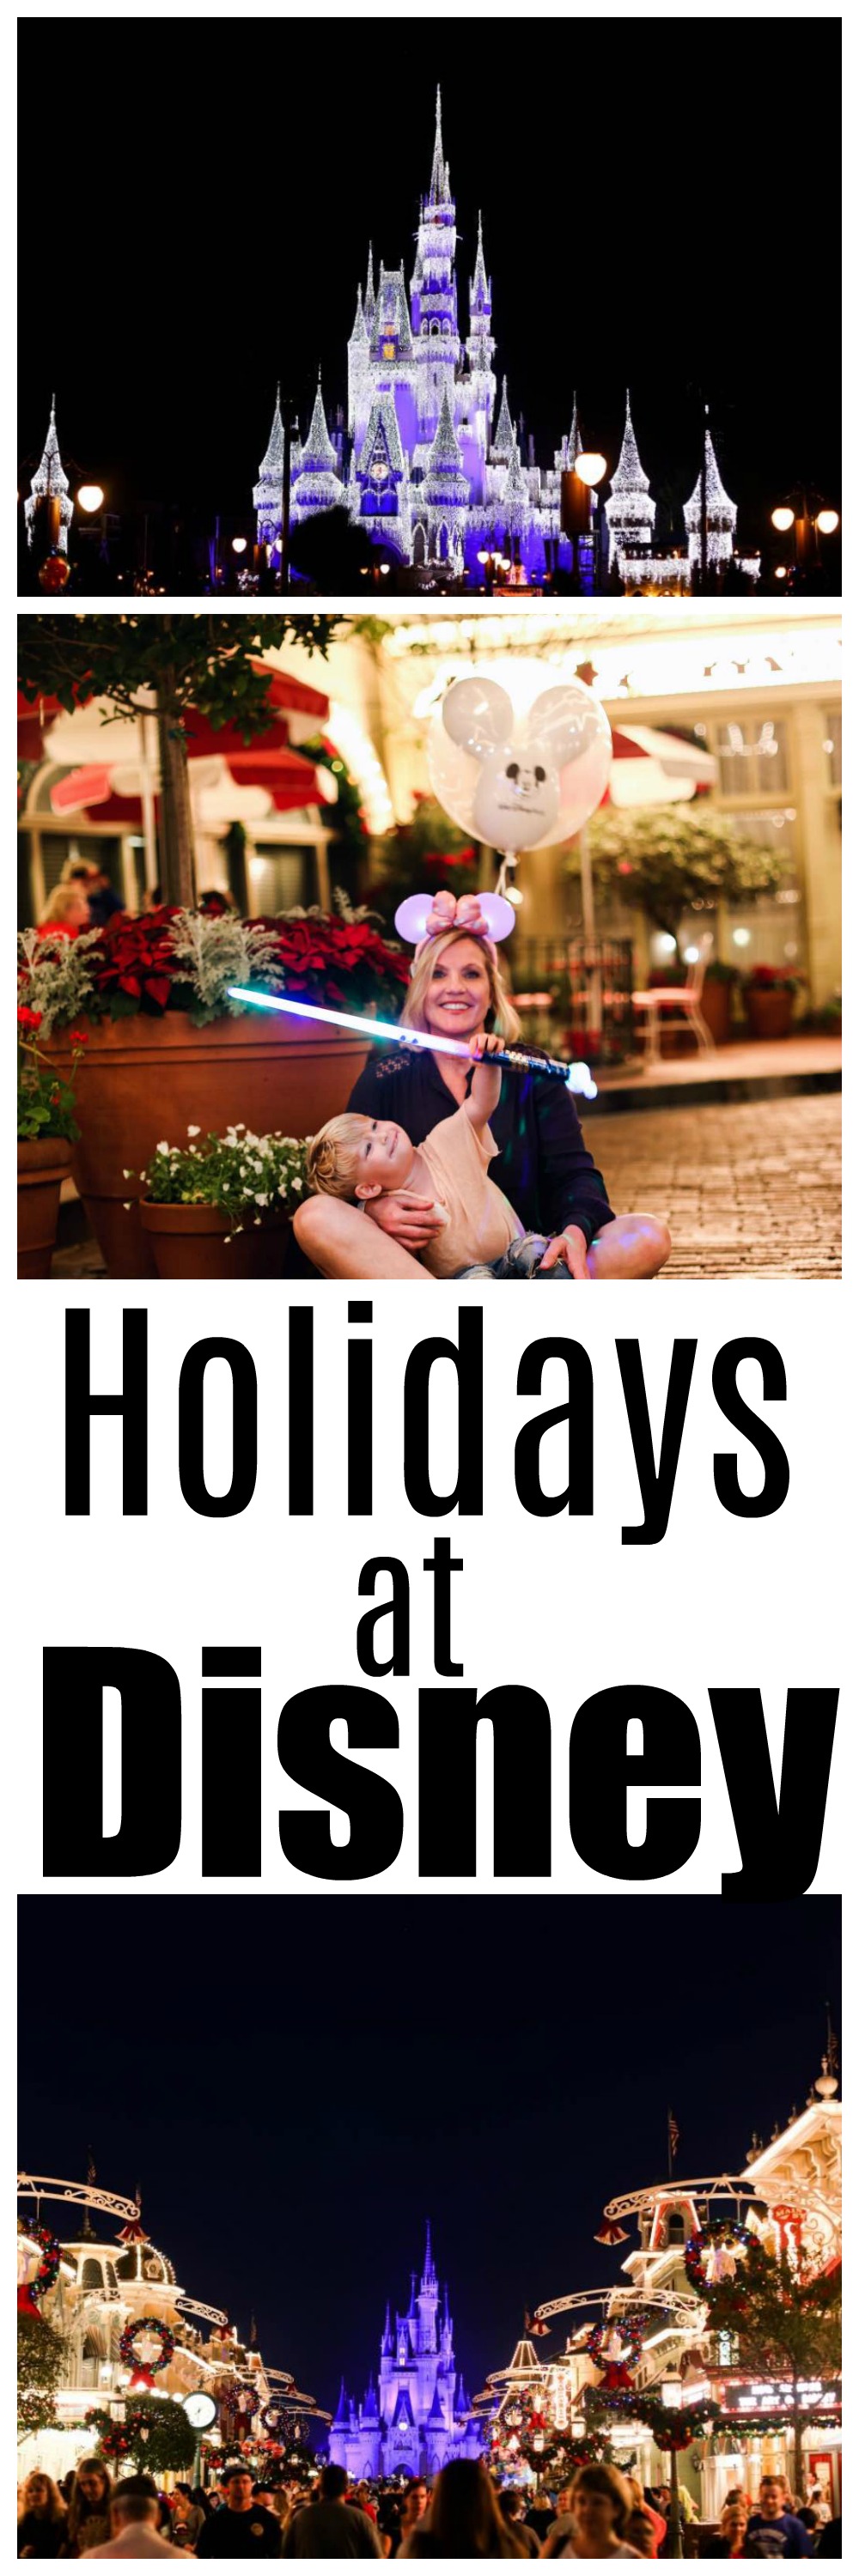 holidays at disney - Holiday Attractions in Orlando by Atlanta travel blogger Happily Hughes